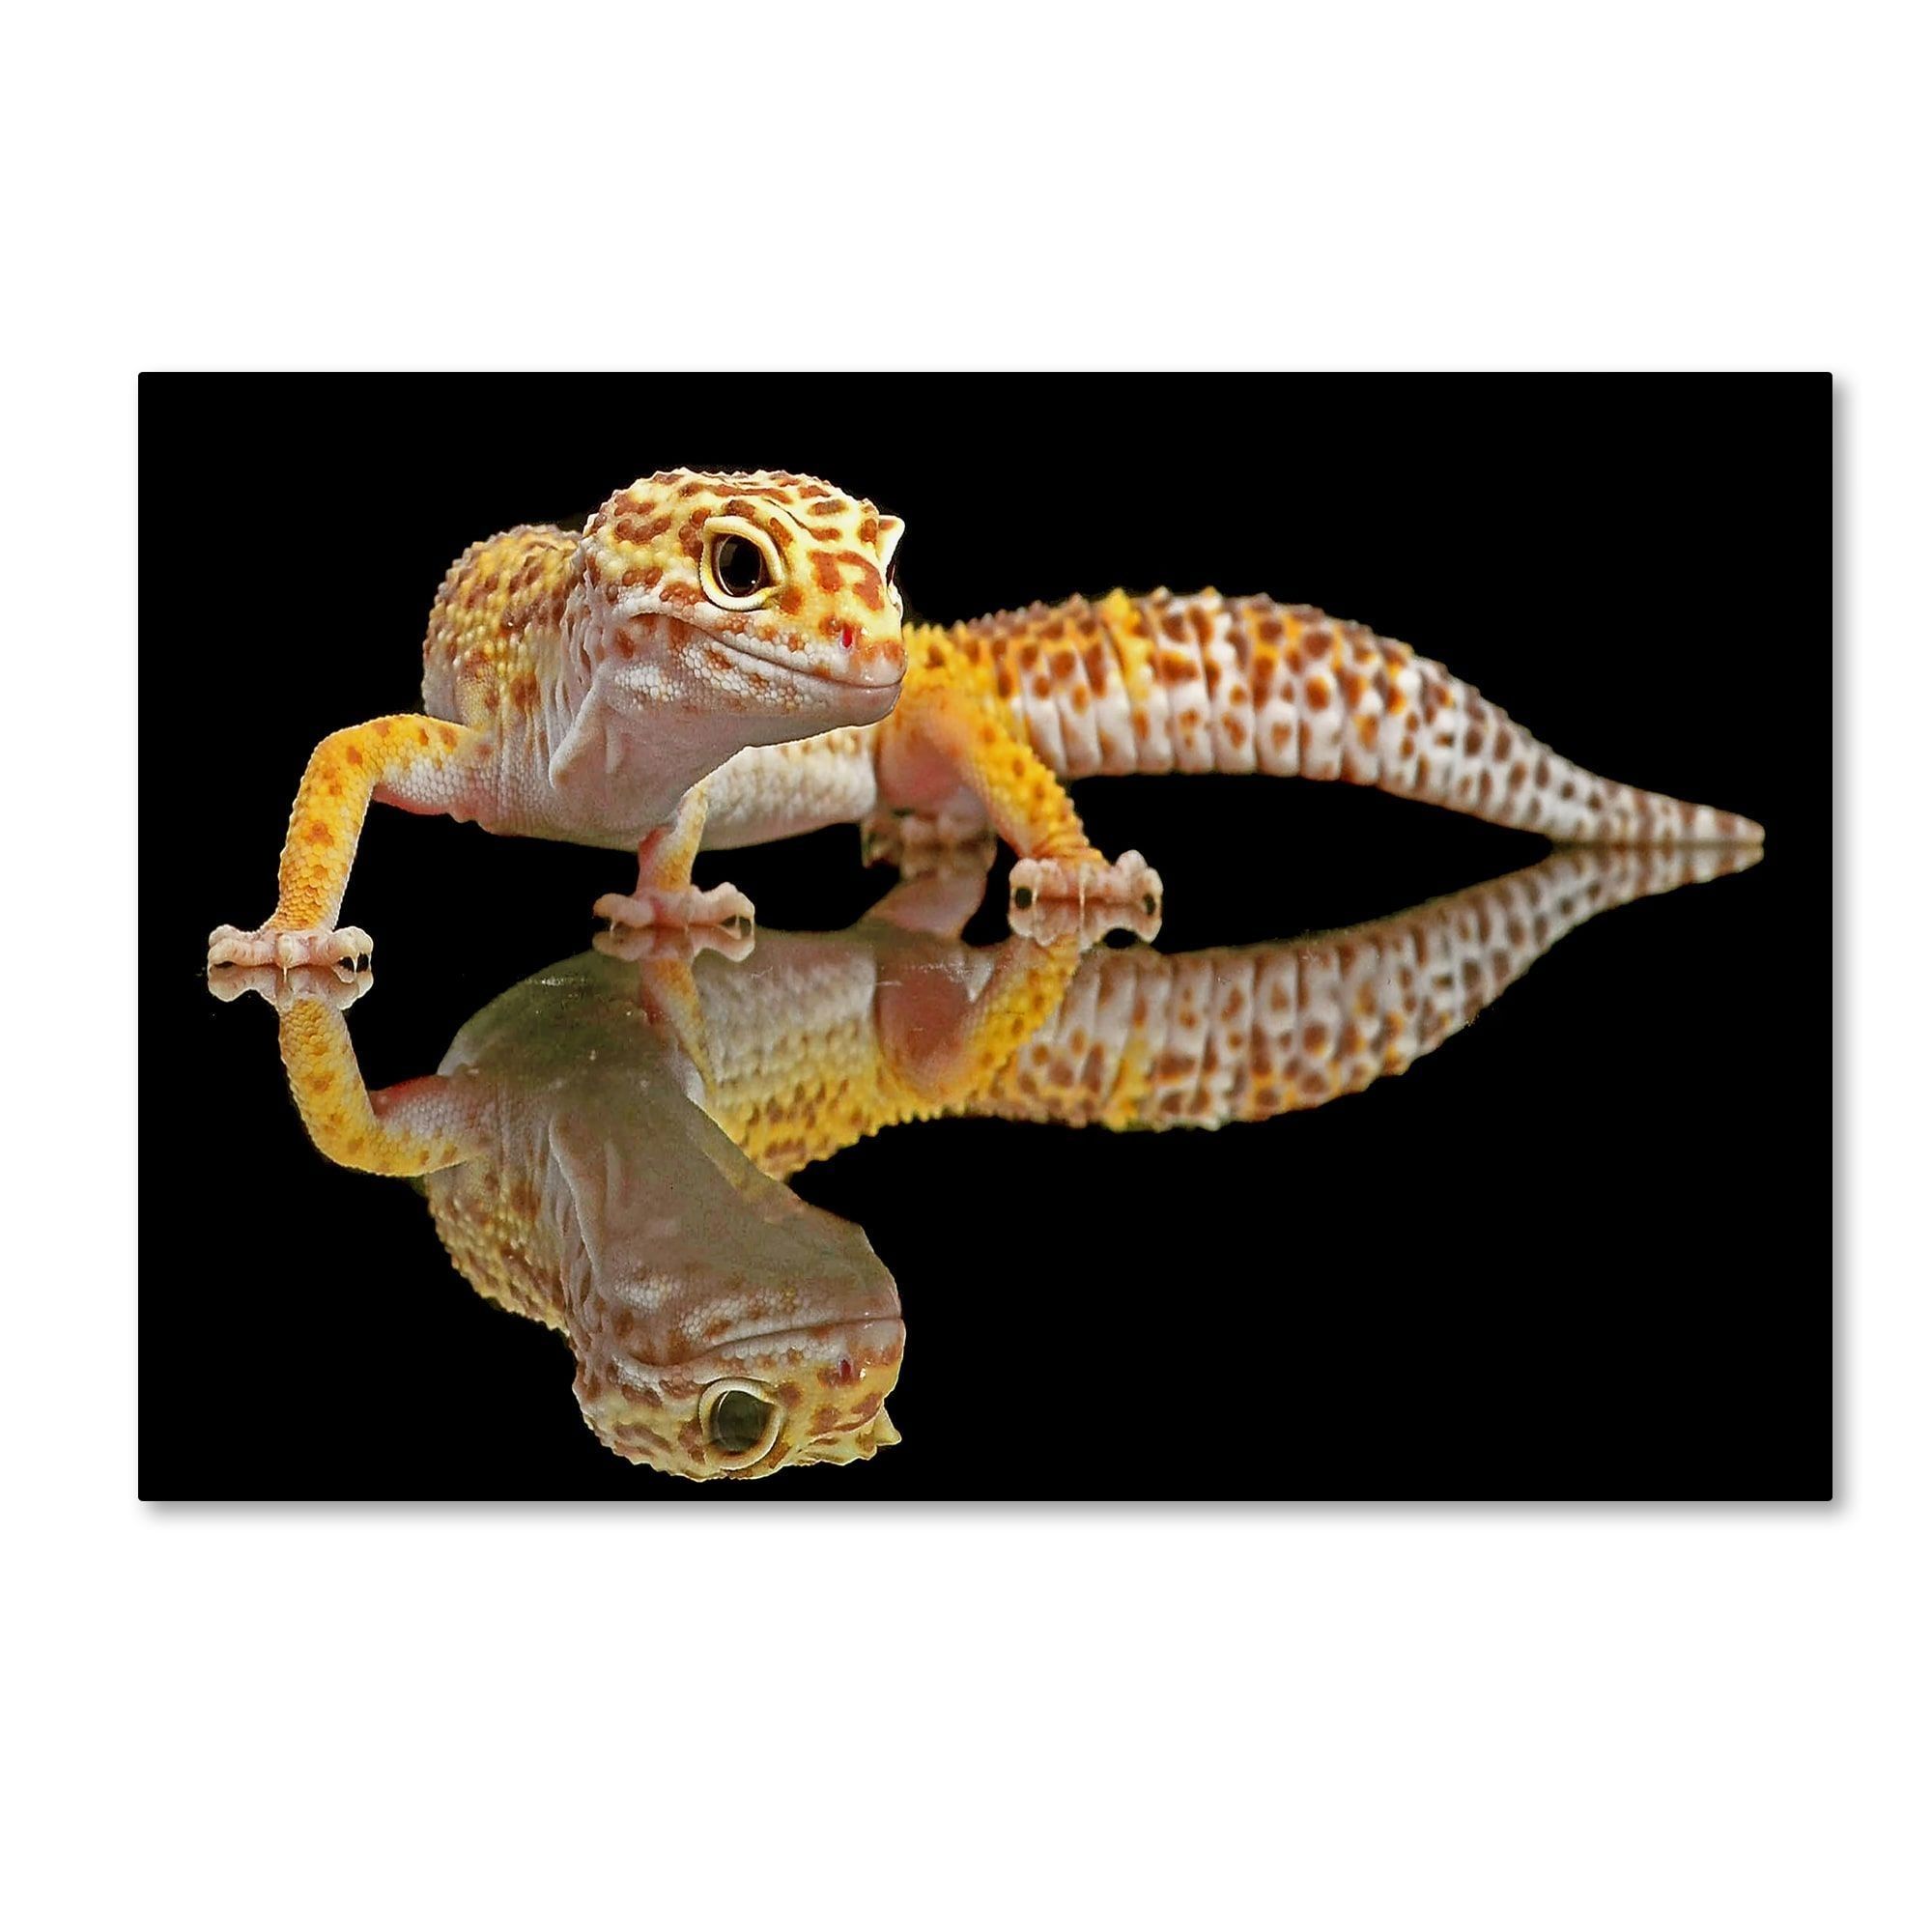 Dikky Oesin 'leopard Gecko' Canvas Art | Animals | Pinterest For Gecko Canvas Wall Art (View 11 of 20)